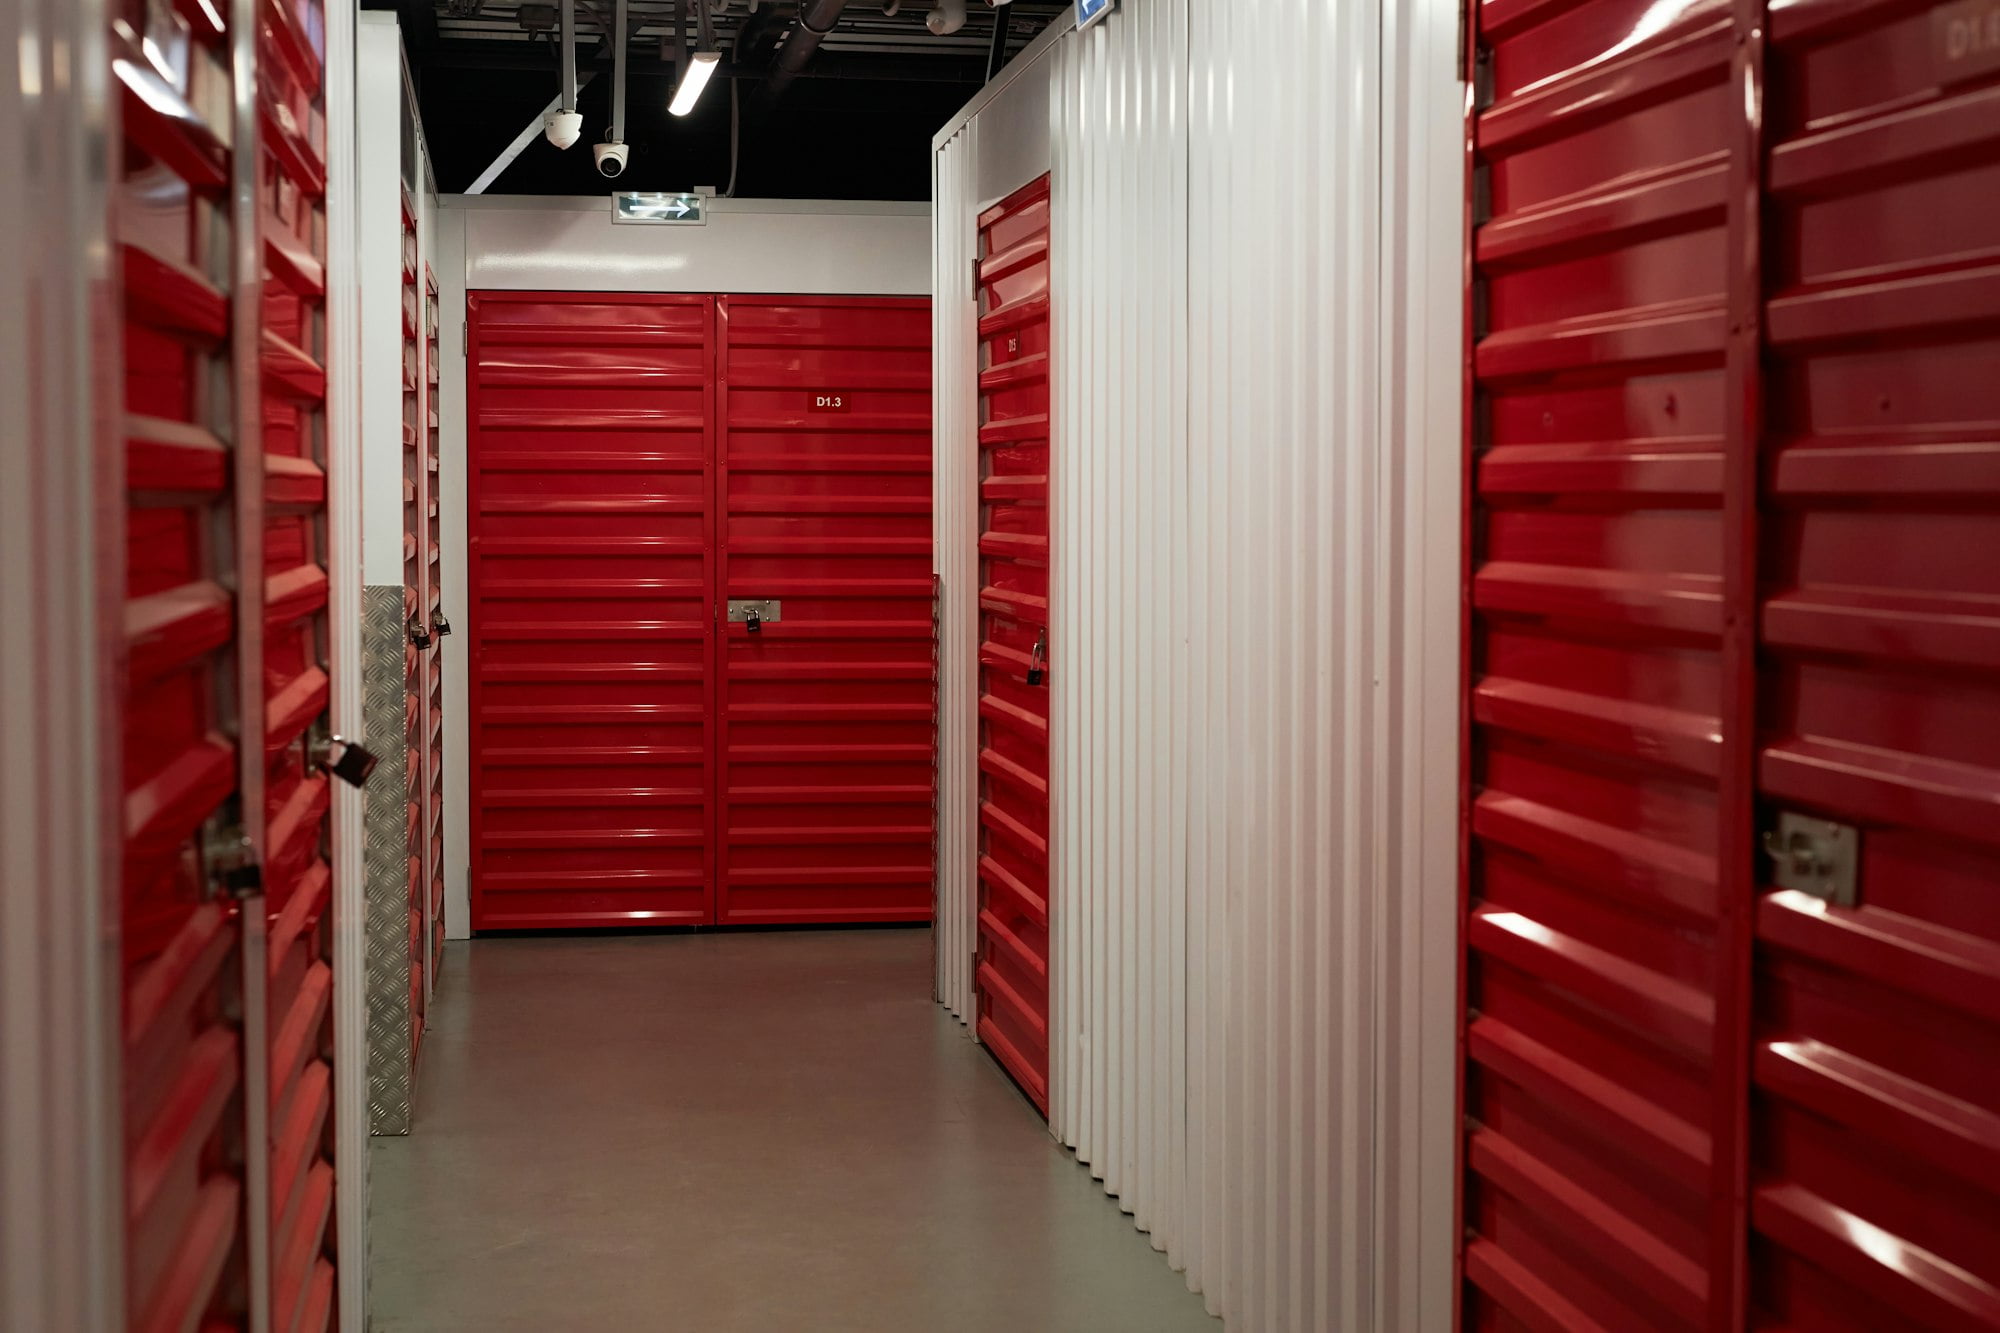 Doors of Storage Units in Warehouse